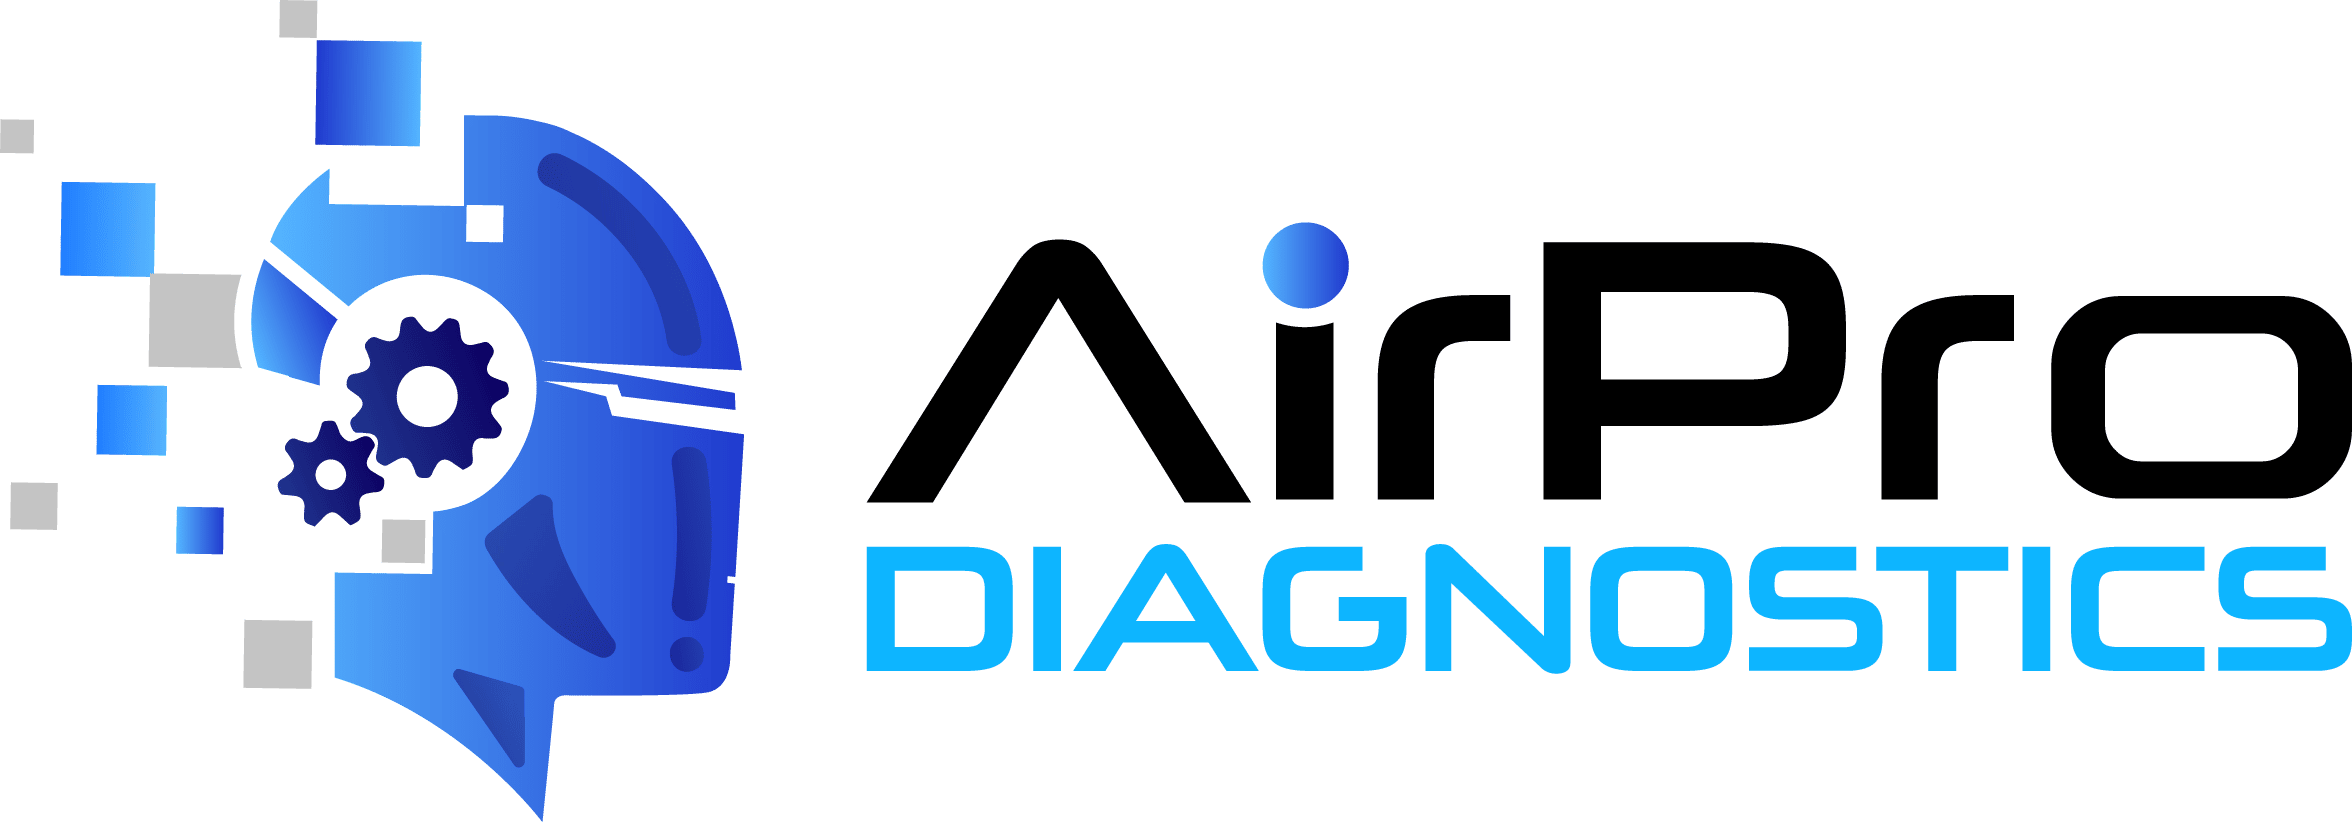 AirPro Diagnostics | Remote Diagnostics & ADAS Scanning | March 2017 | AirPro Diagnostics | Remote Diagnostics & ADAS Scanning